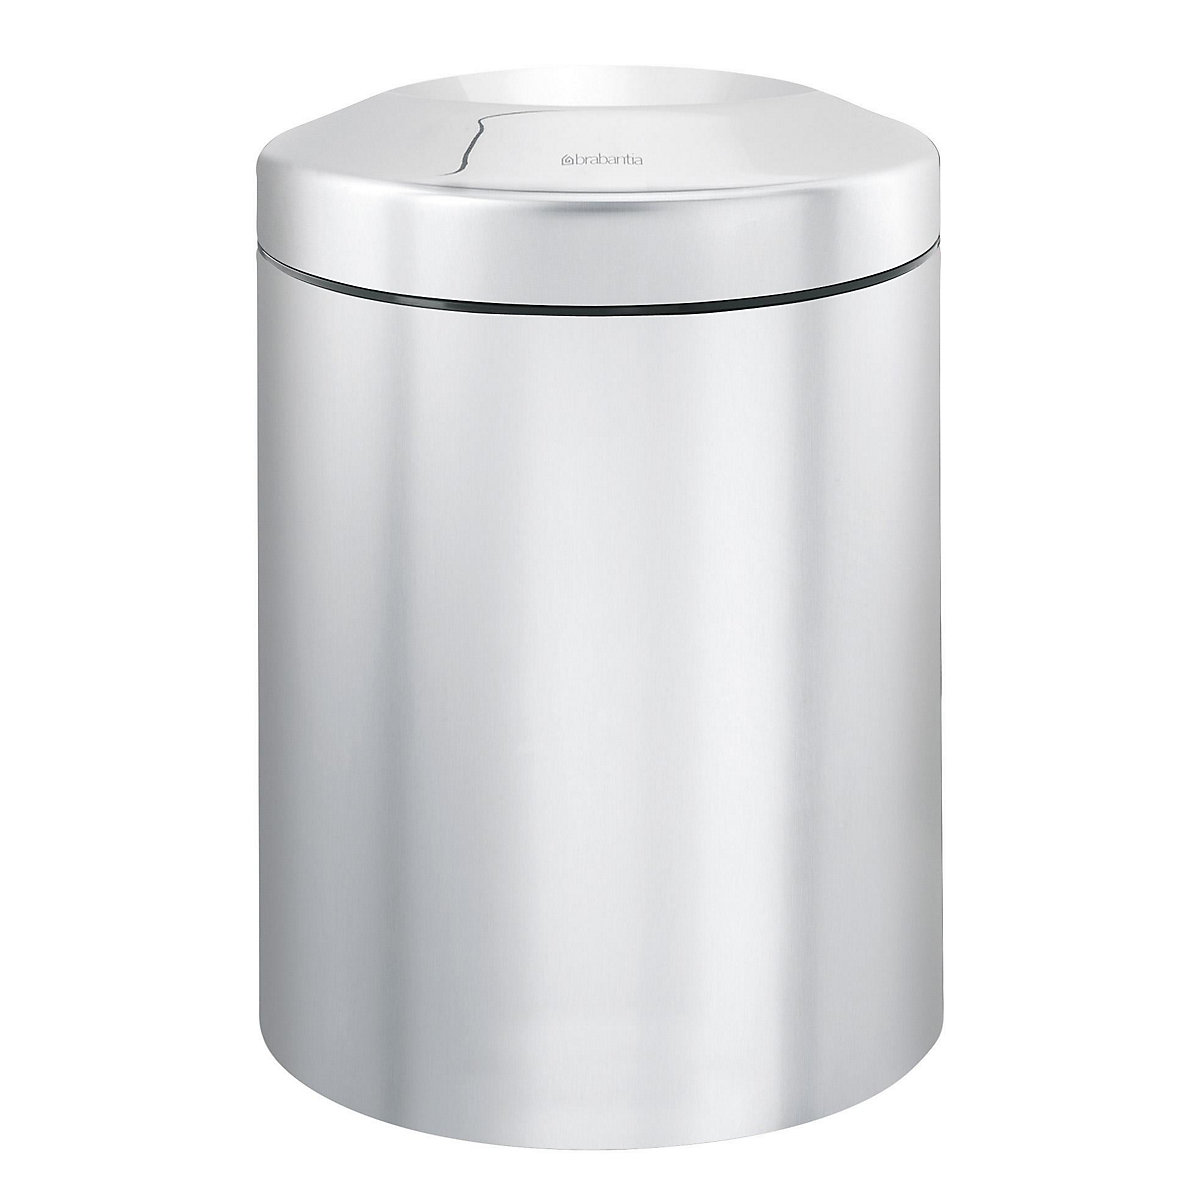 Safety waste paper bin, stainless steel – Brabantia